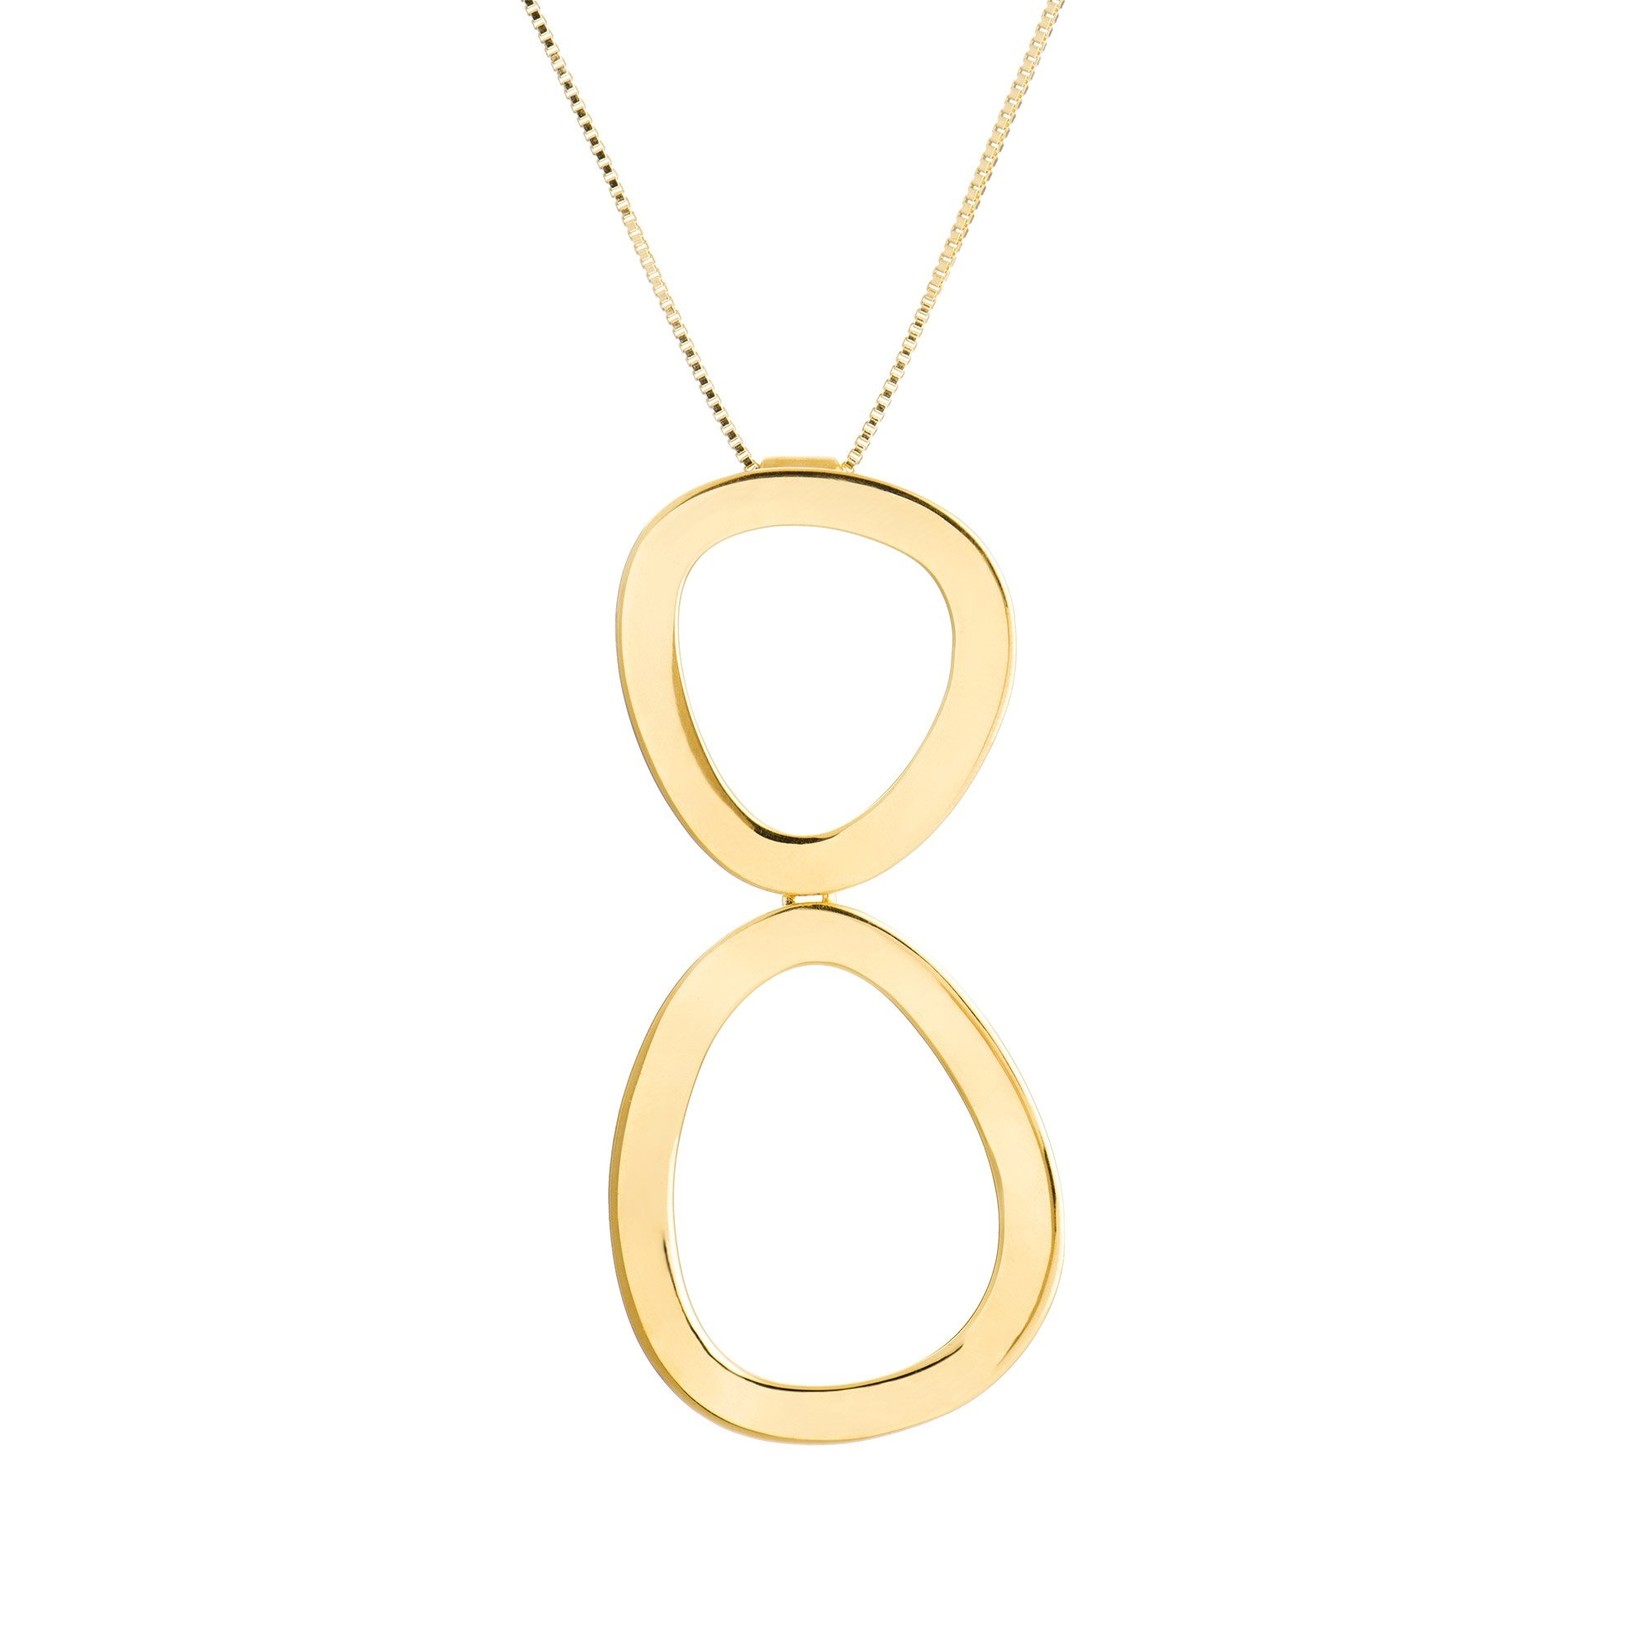 Lolo Jewellery Elise Pendant - Gold